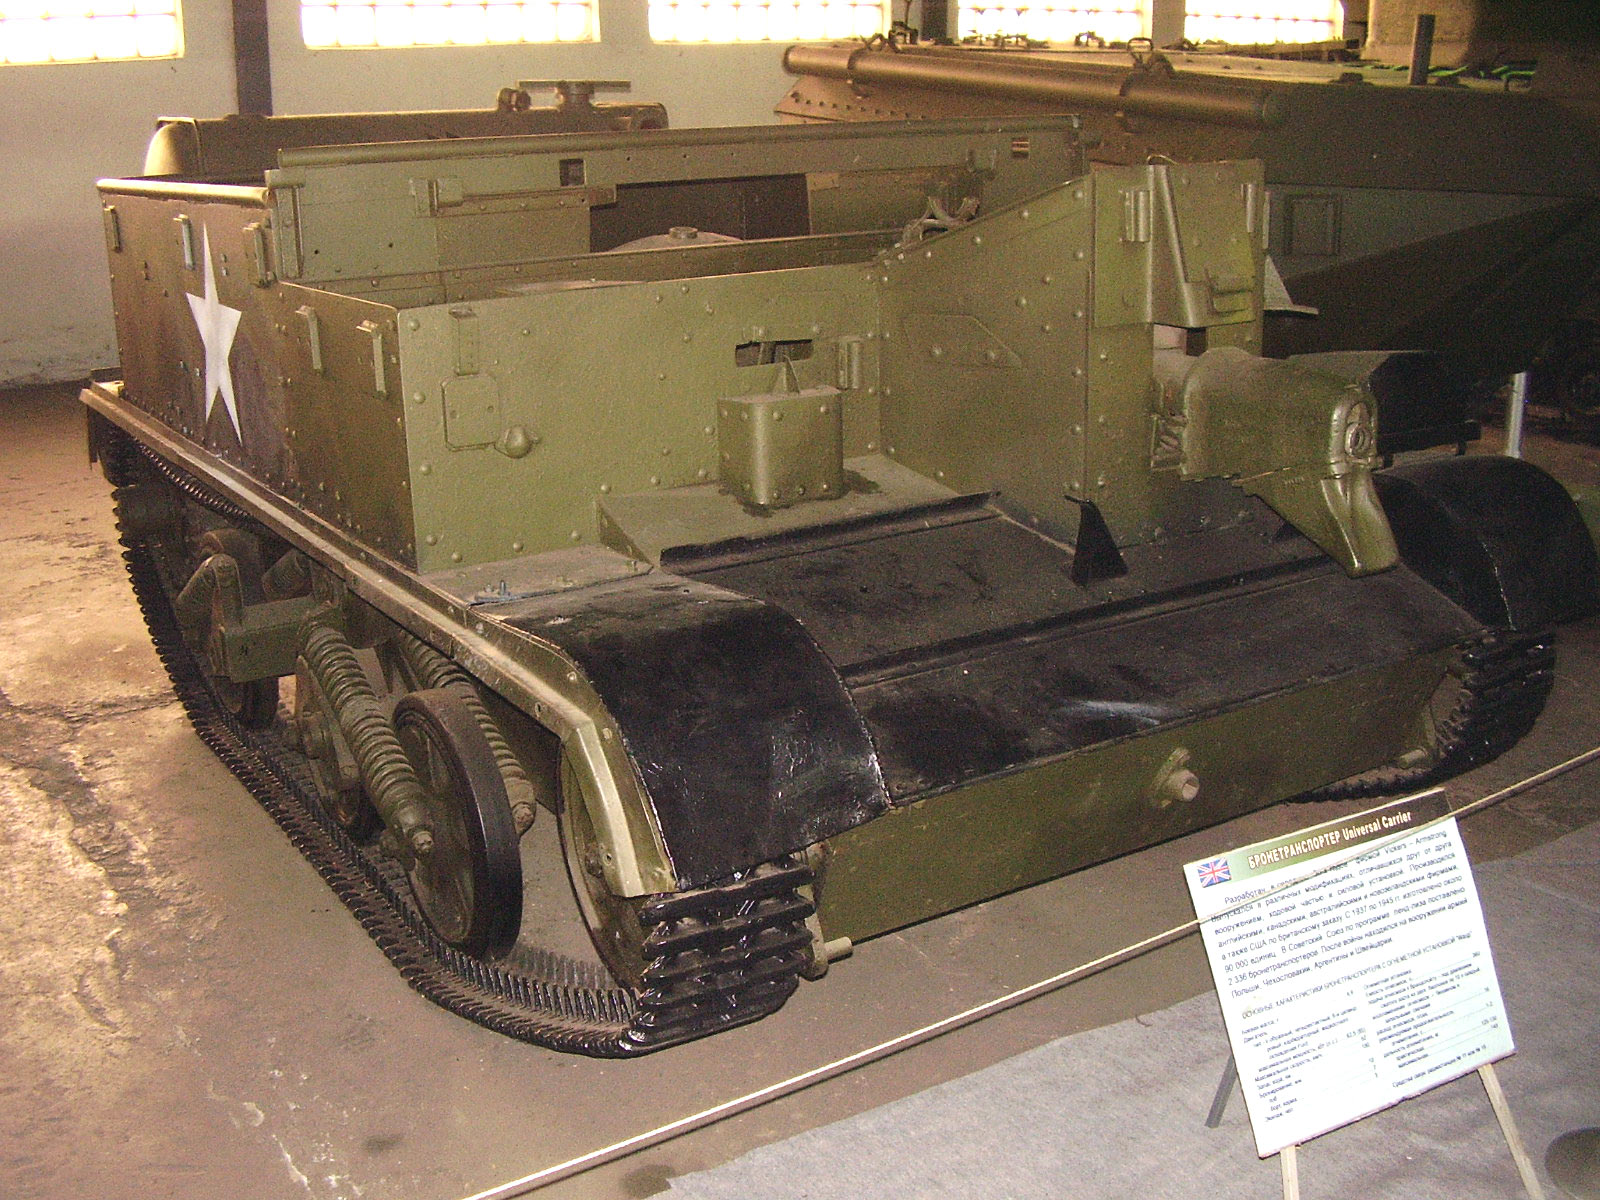 English armored vehicle Universal Carrier, Kubinka, tank museum, photo 2006.